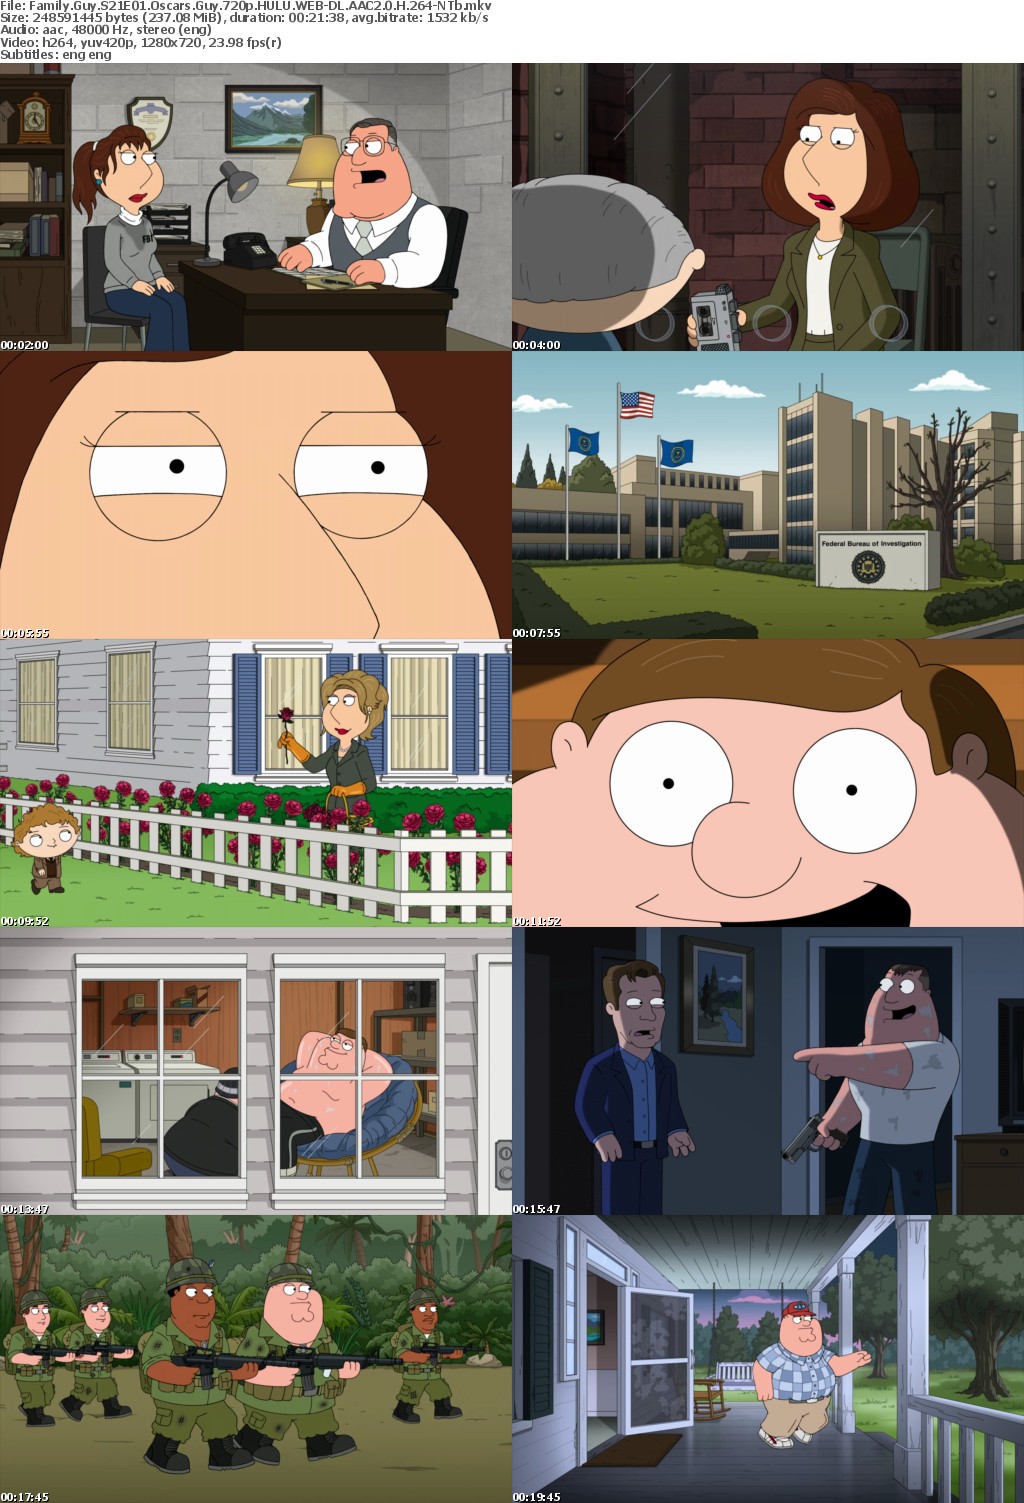 Family Guy S21E01 Oscars Guy 720p HULU WEBRip AAC2 0 H264-NTb